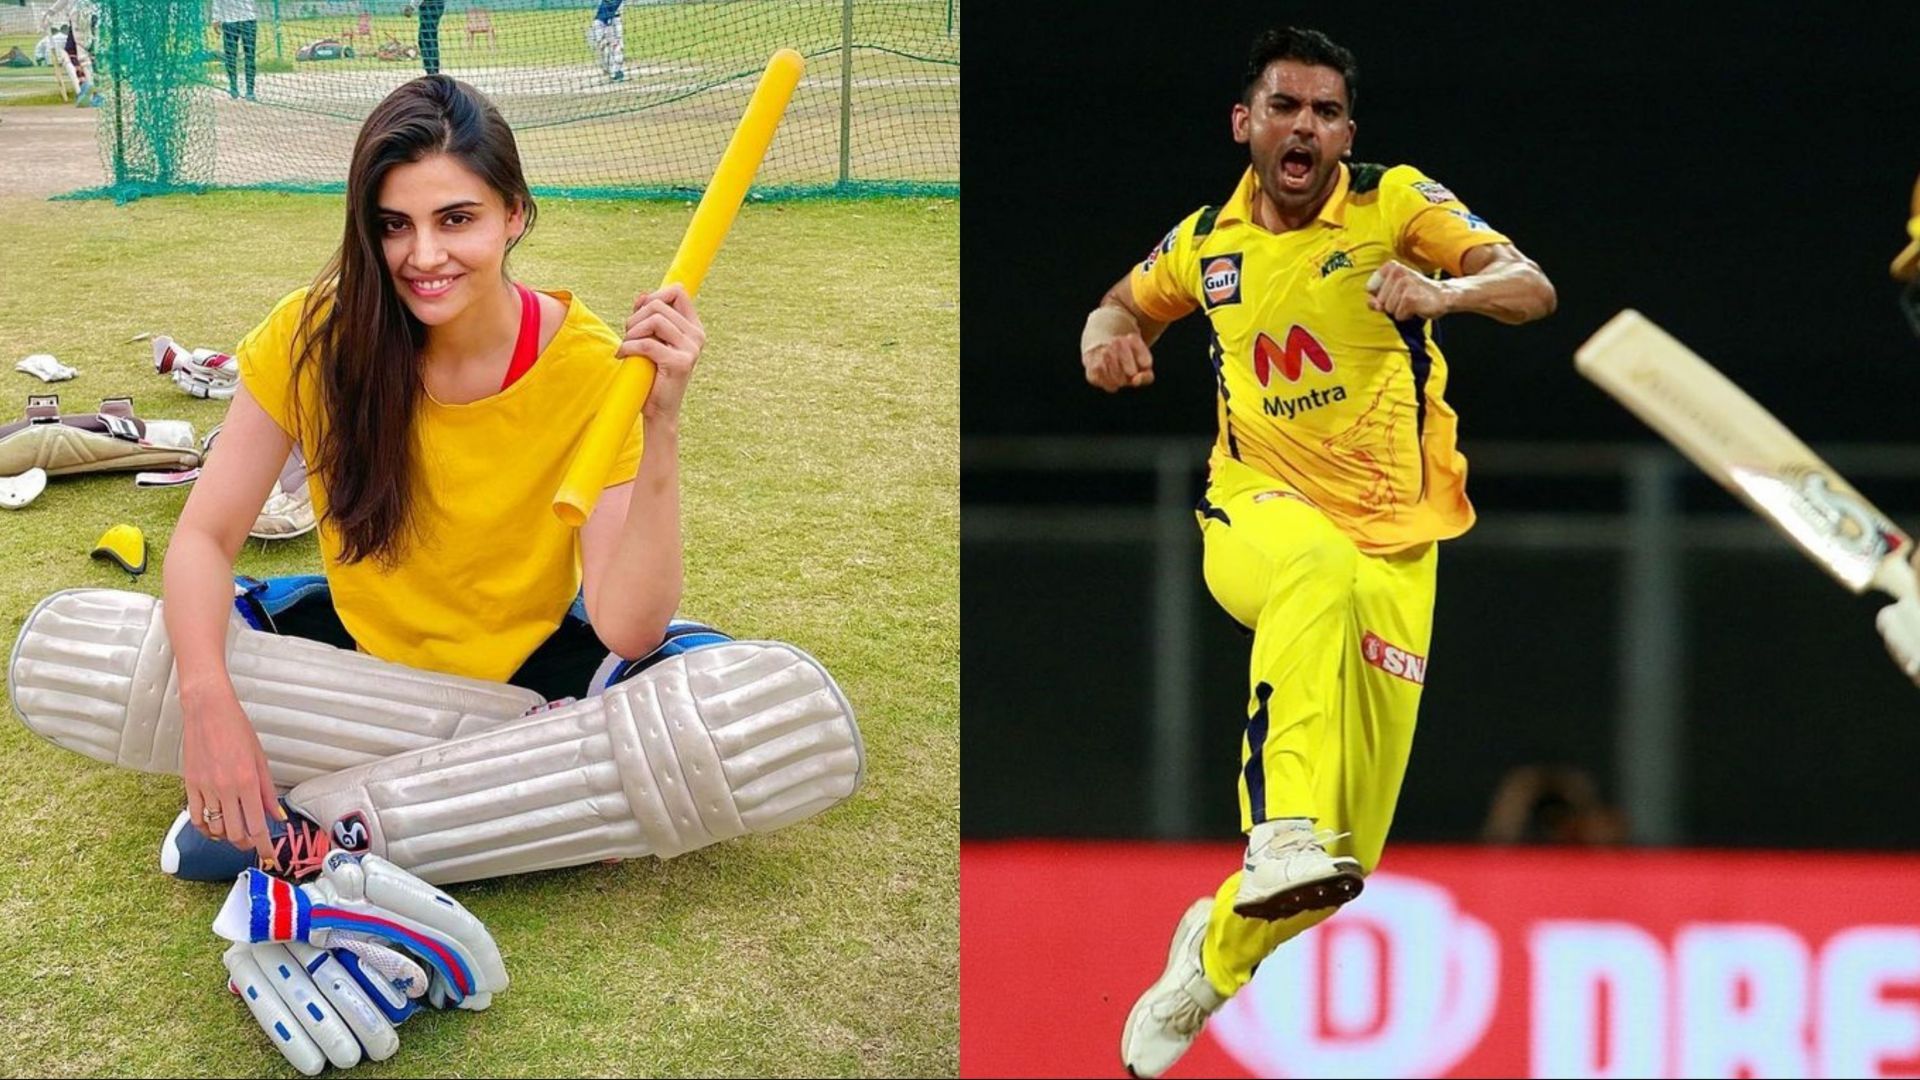 Malti Chahar (L) is the sister of Chennai Super Kings fast bowler Deepak Chahar (R)